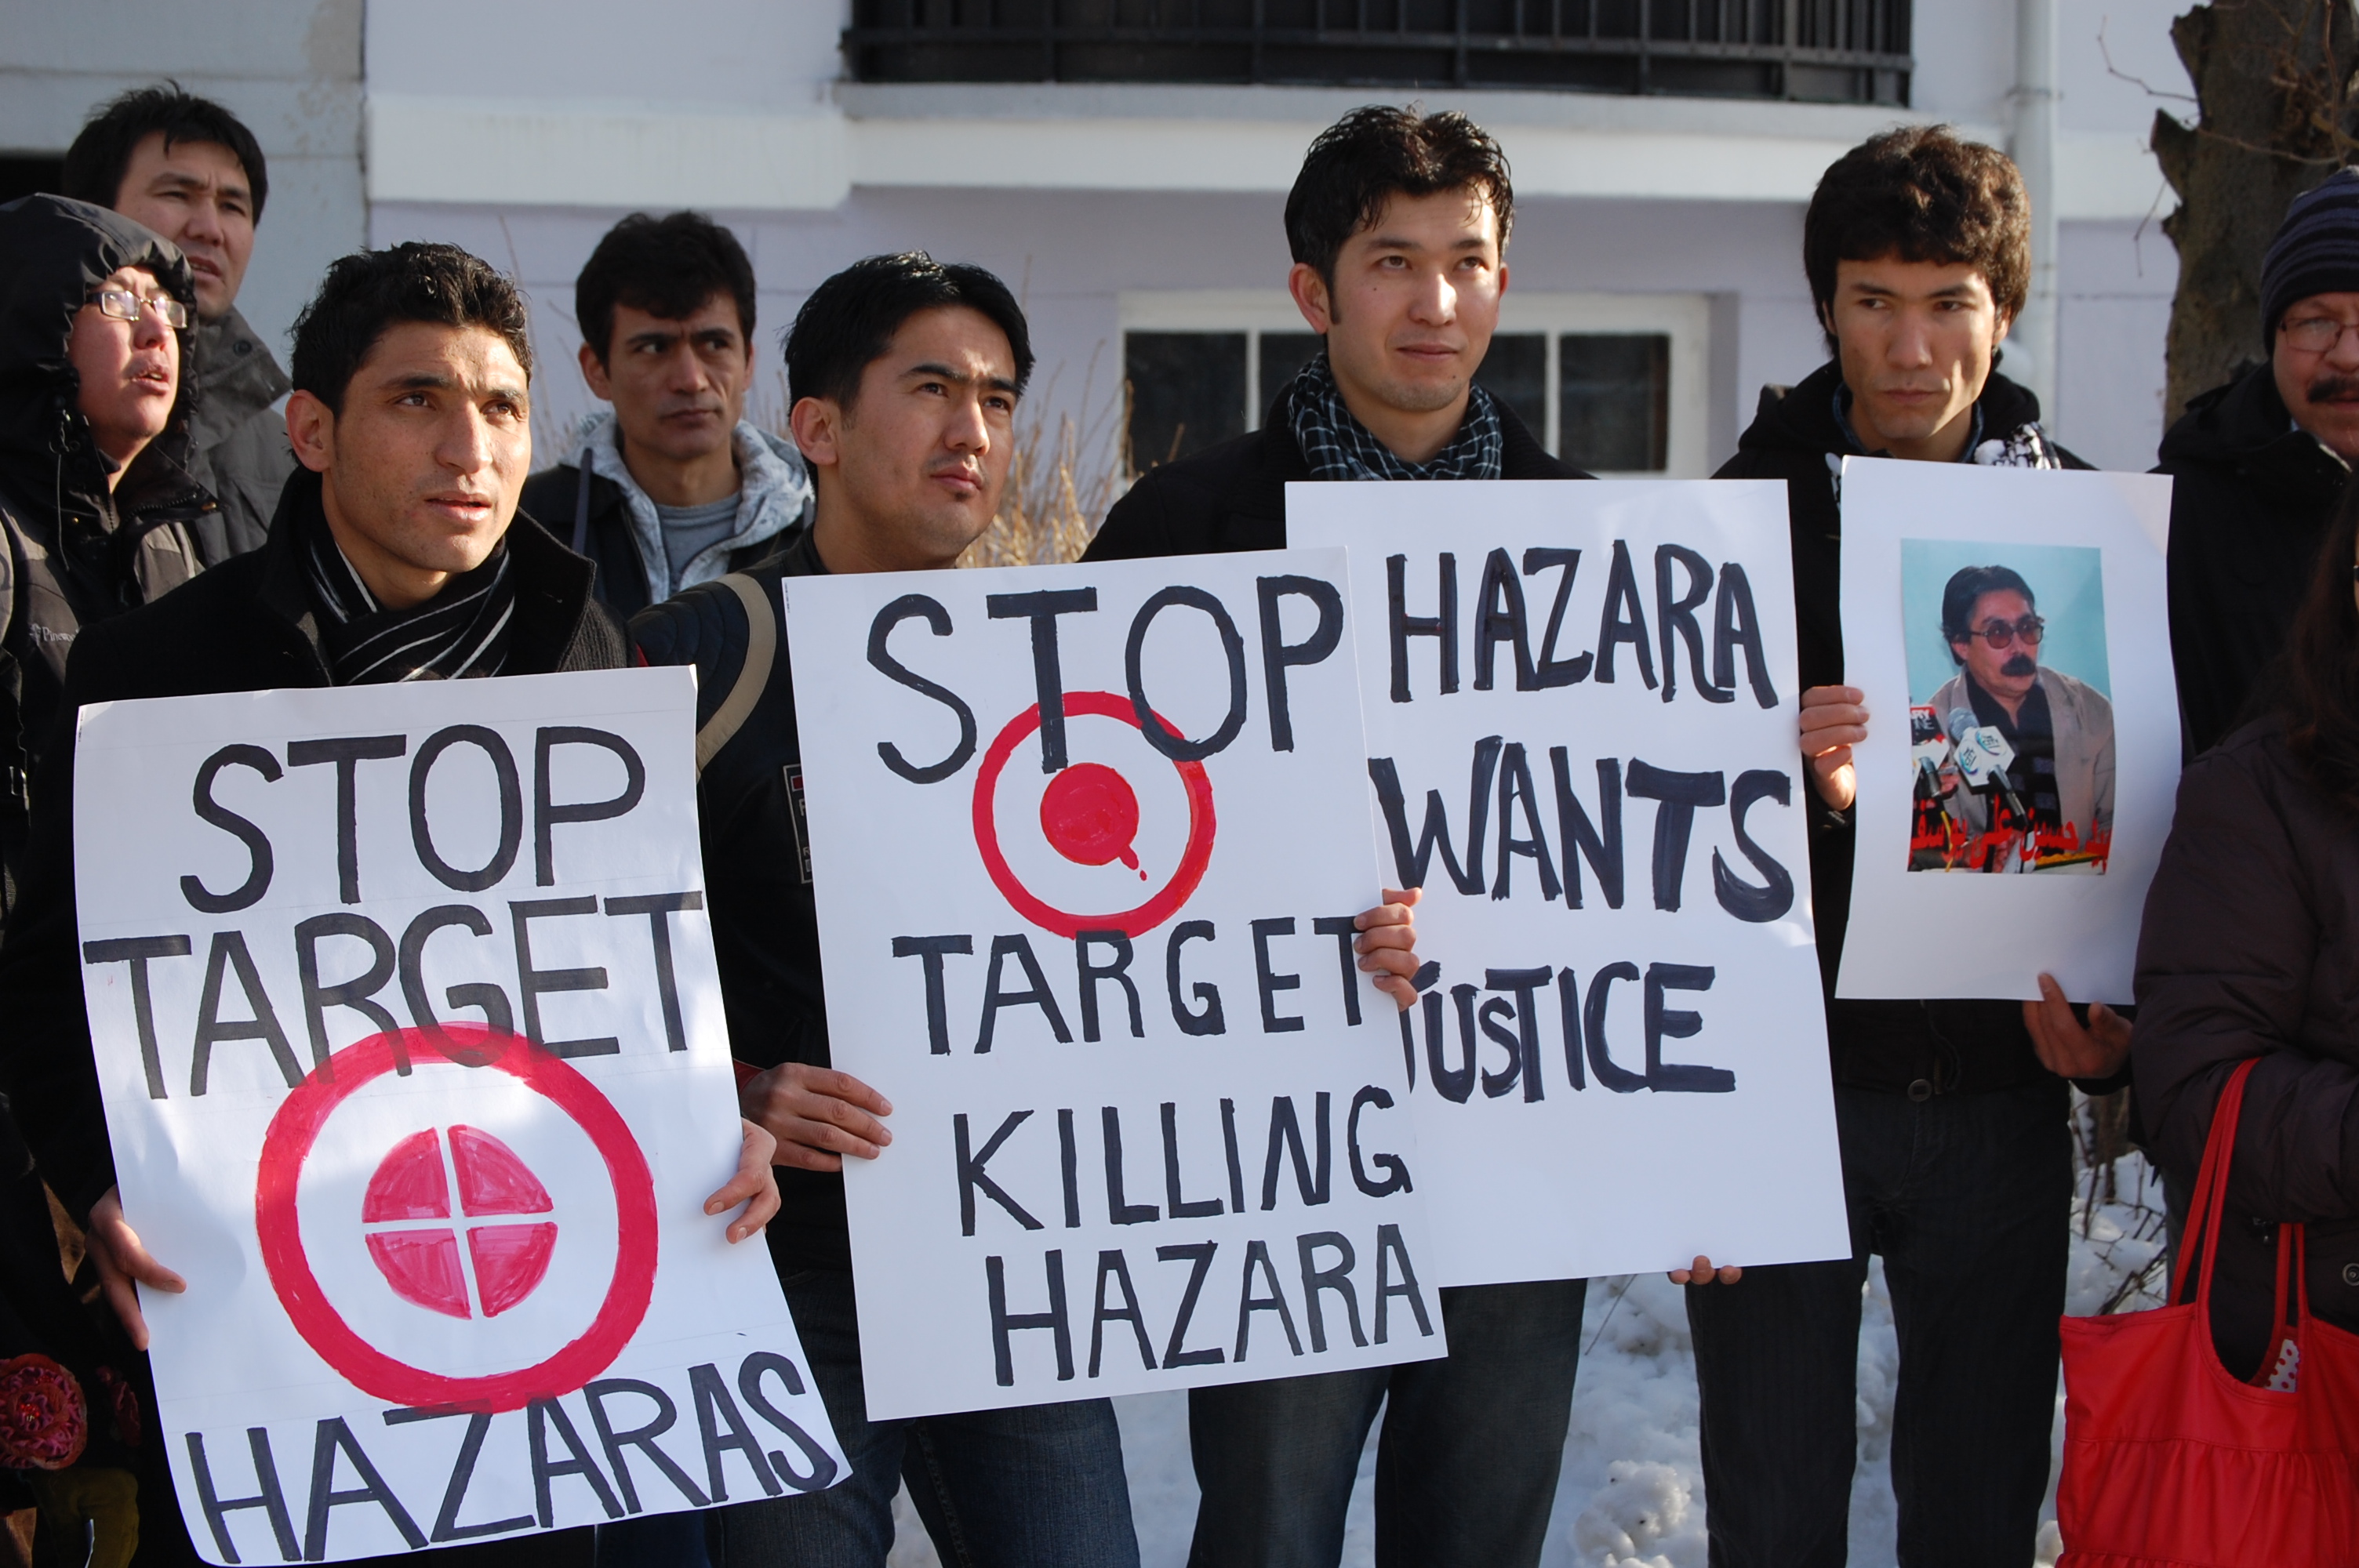 norway-oslo-hazaras-protest-hussainaliyusufis-assassination-quetta-pakistan-20.jpg